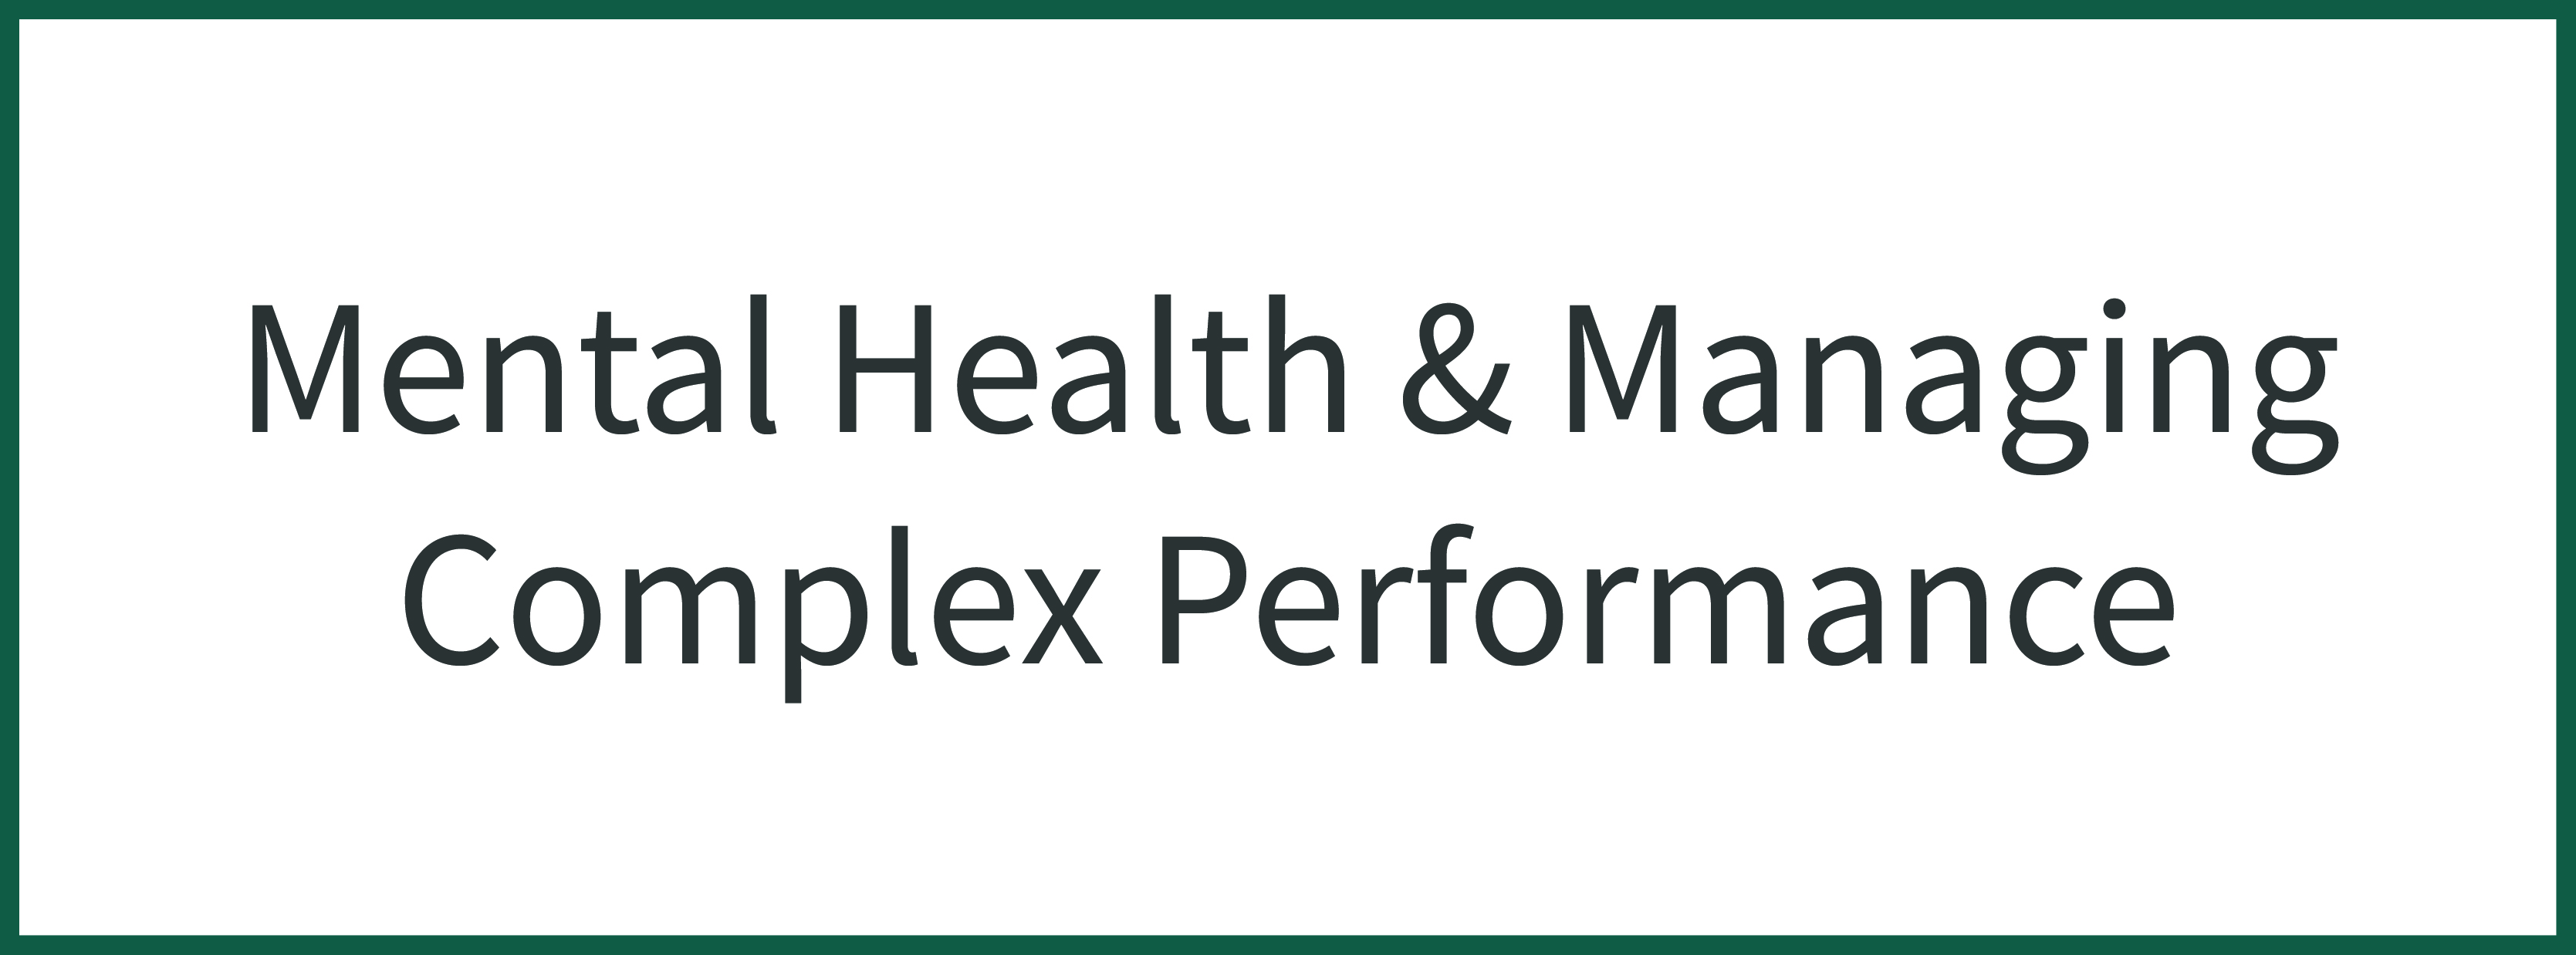 Mental Health & Managing Complex Performance